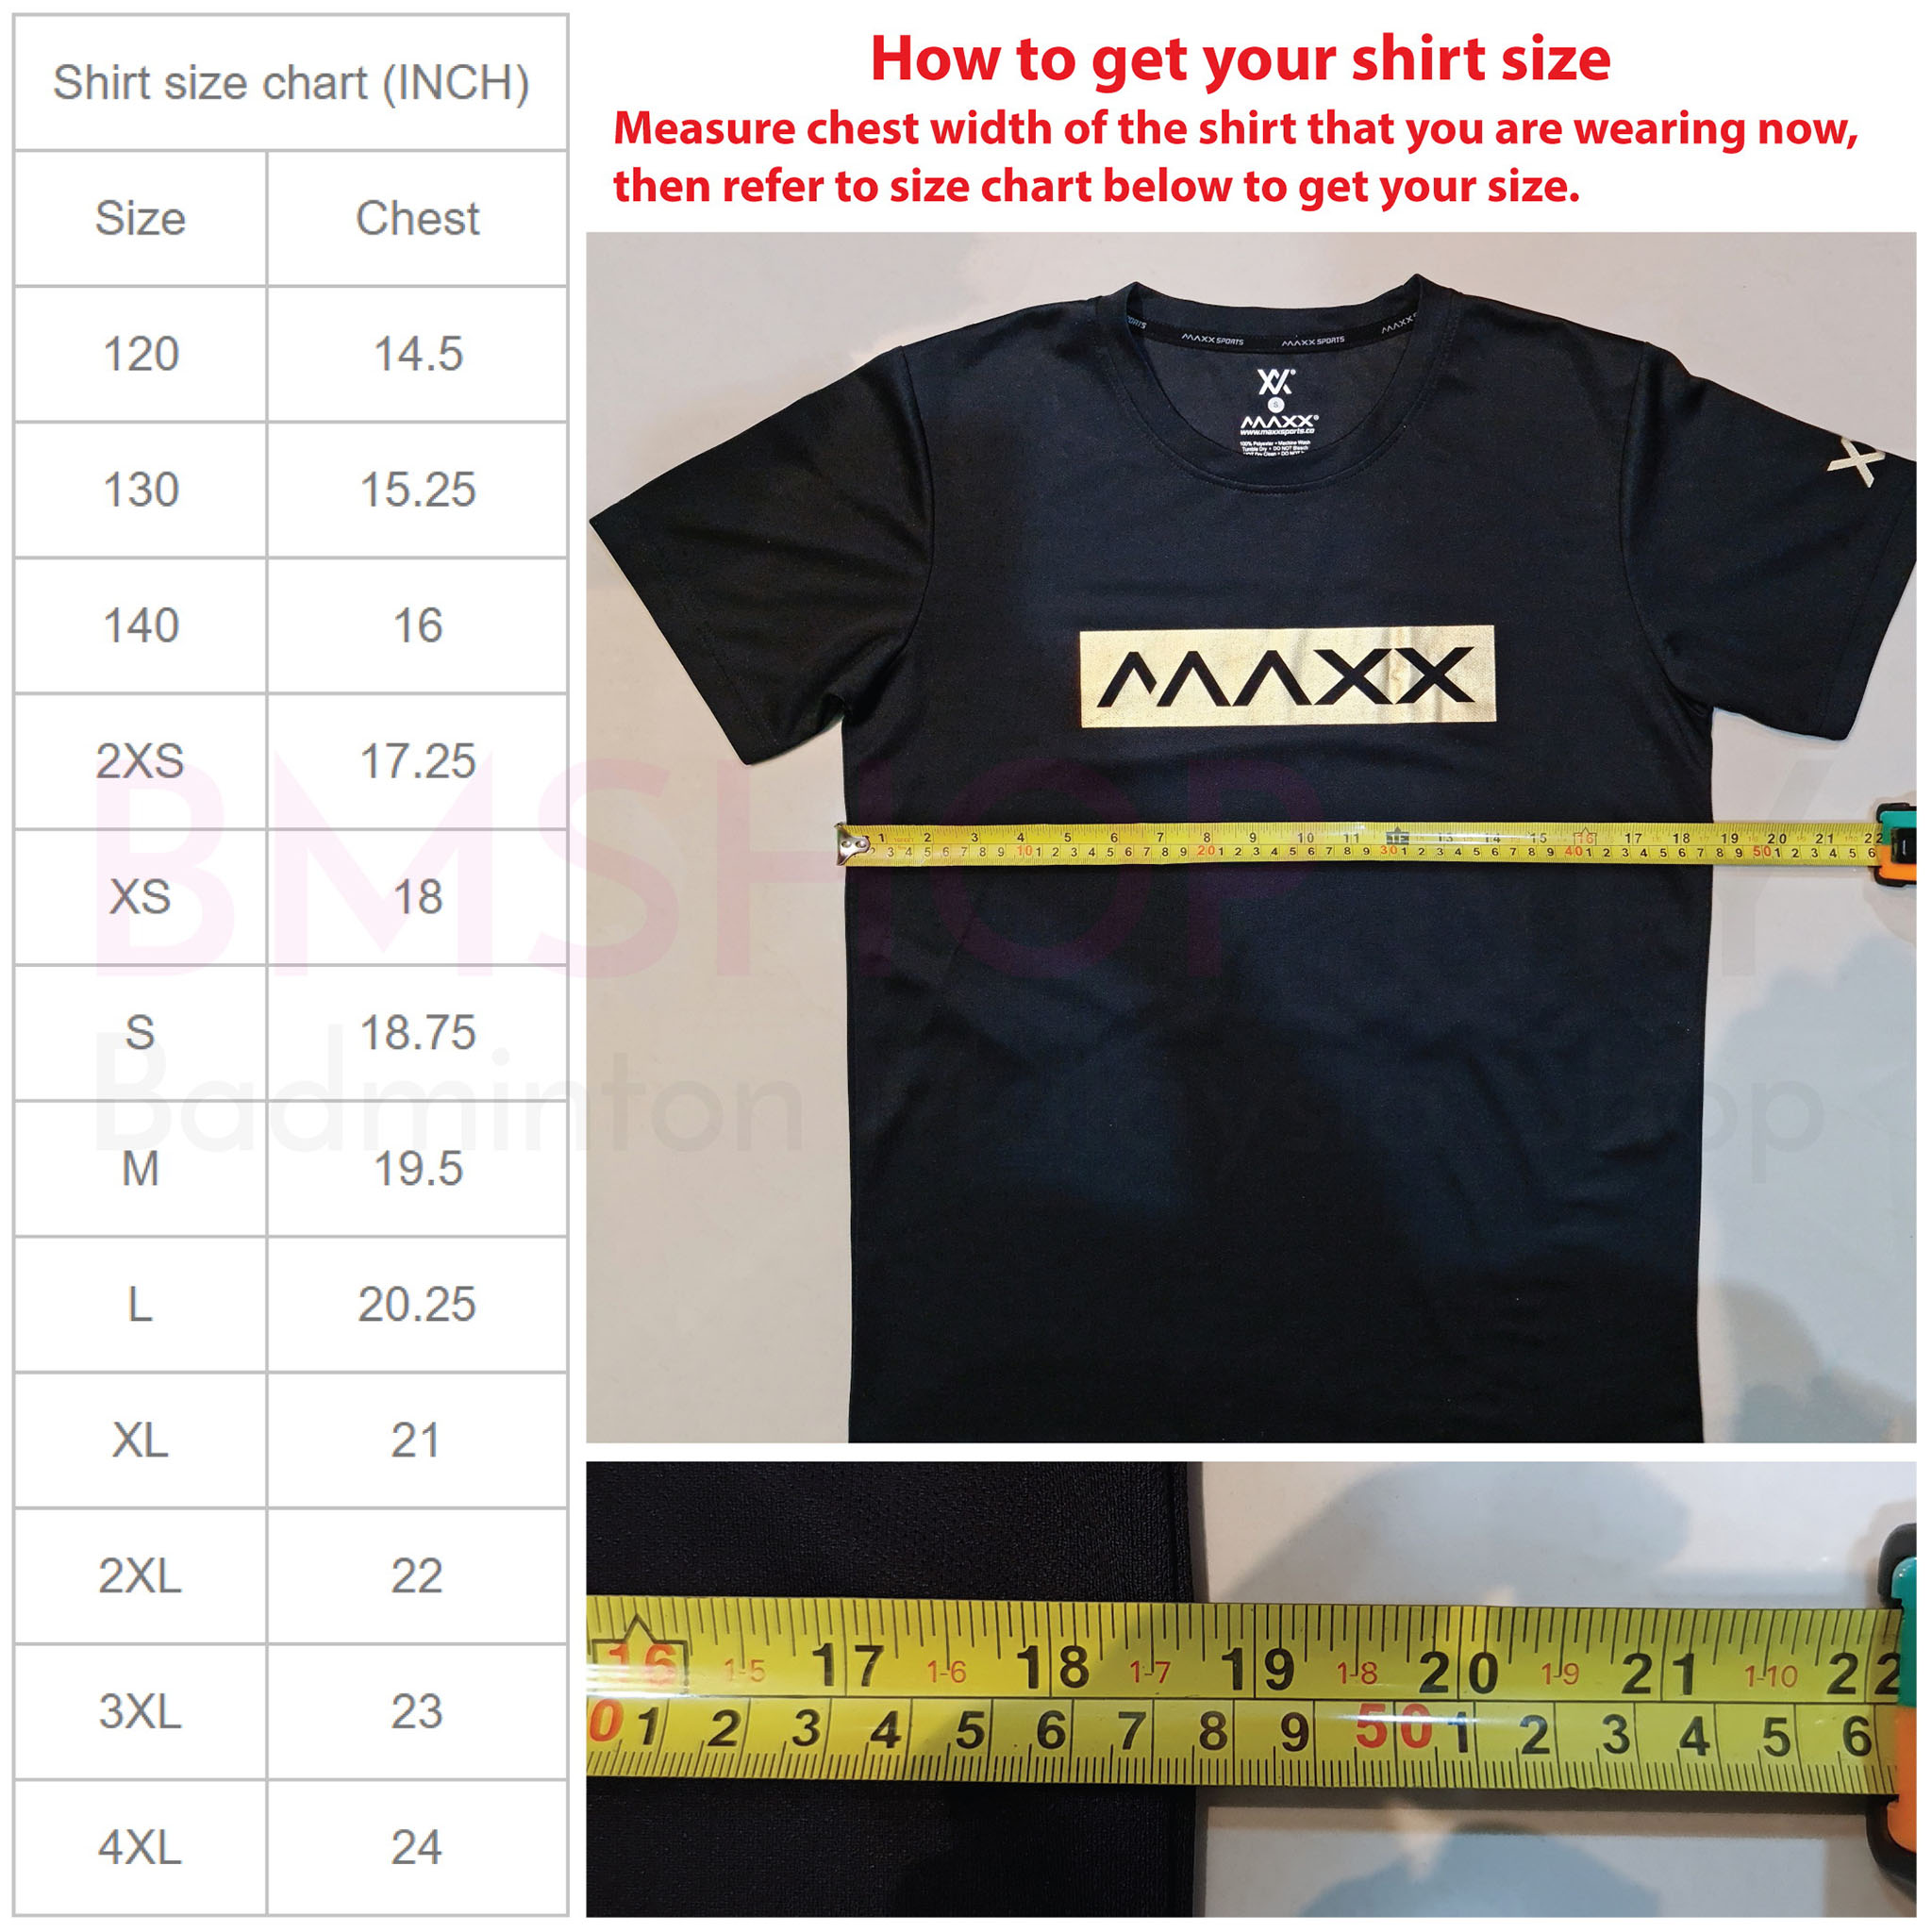 MAXX shirt size chart